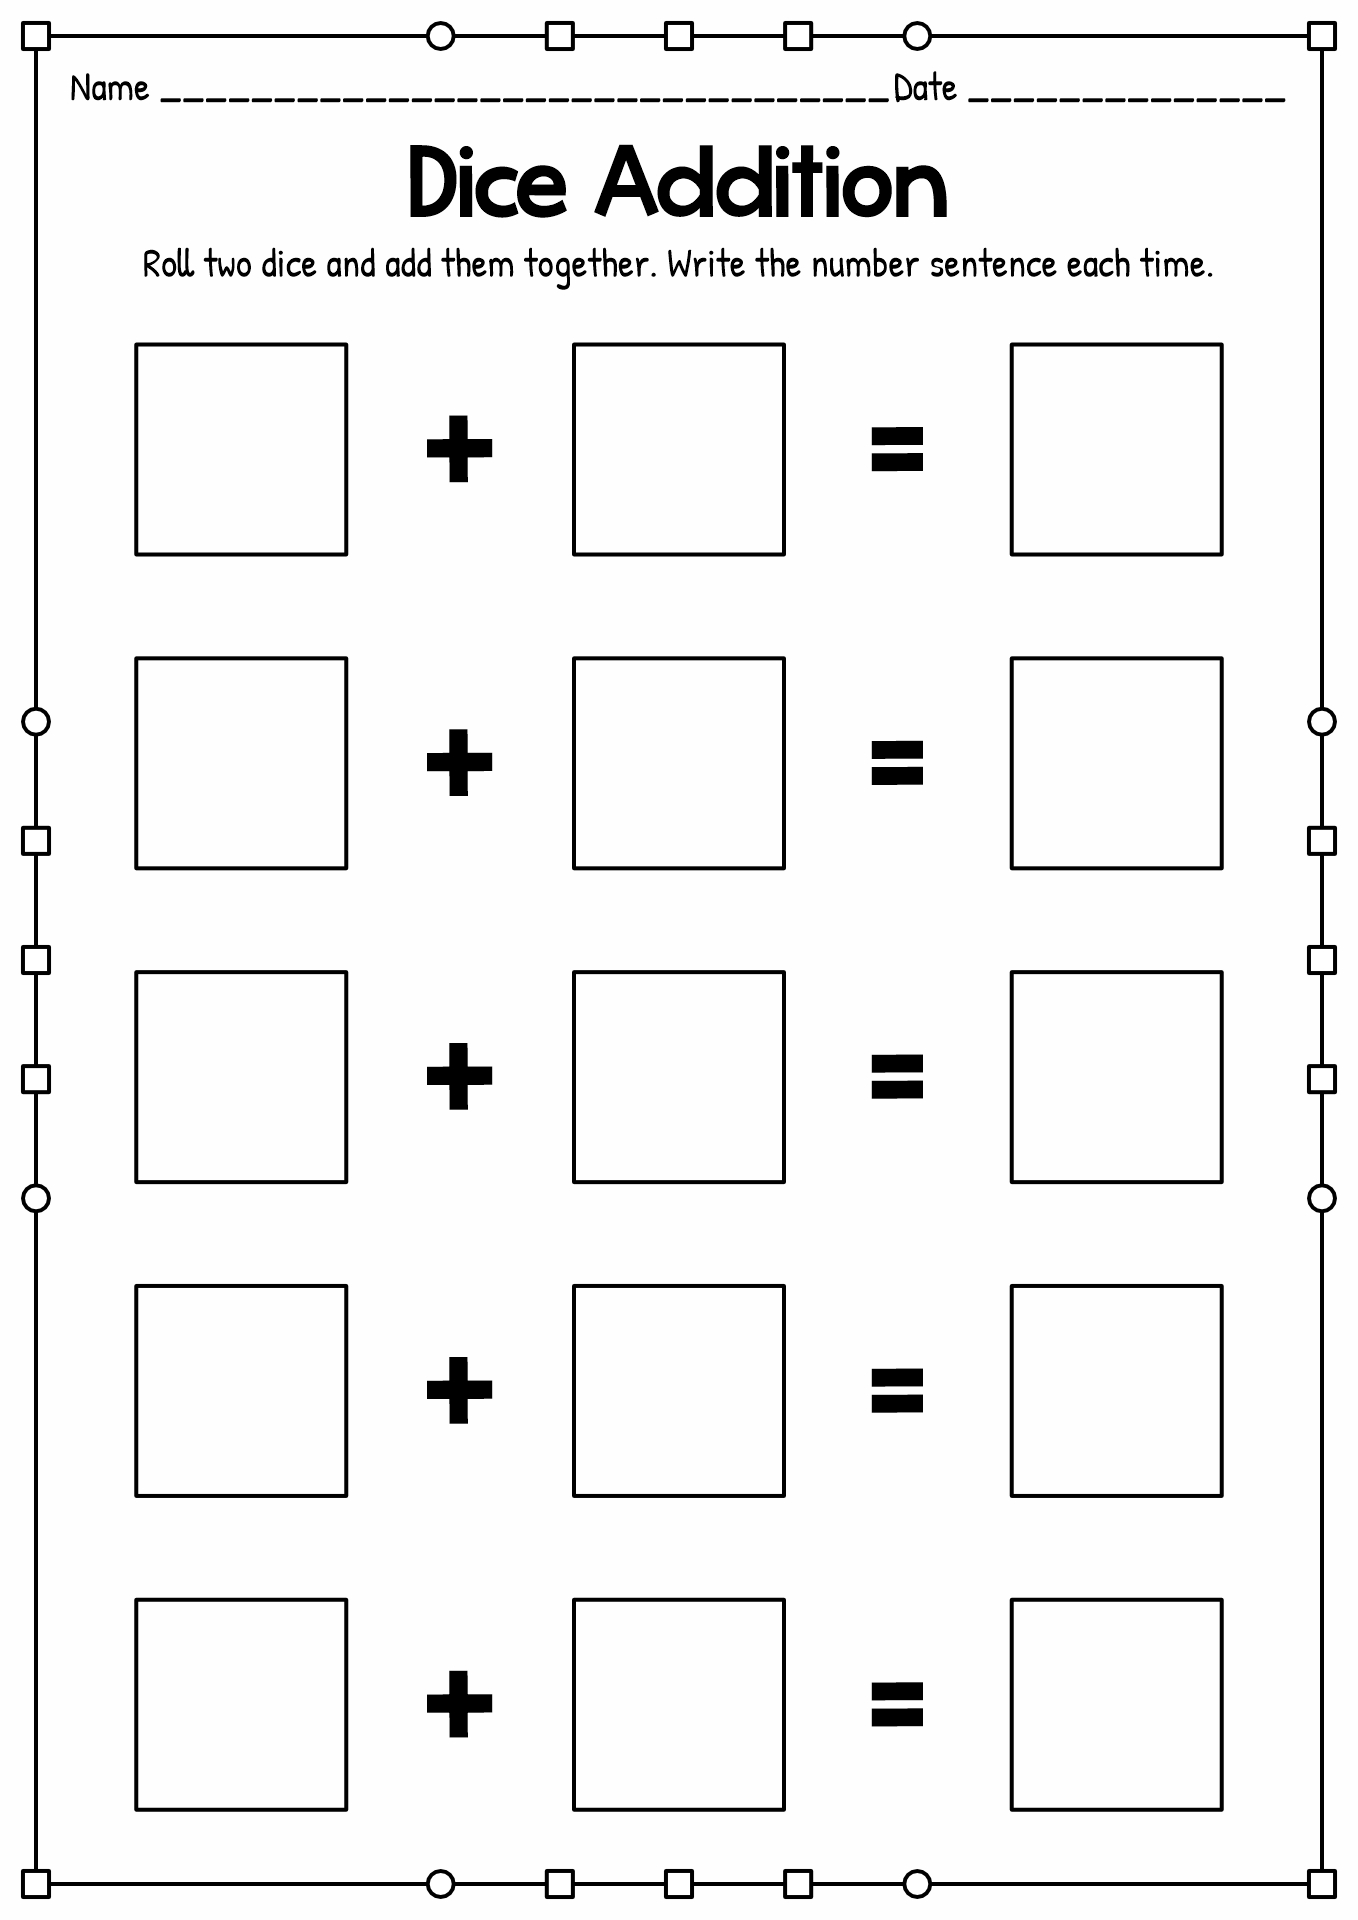 12 Best Images of Dice Math Worksheets - Dice Addition Worksheets